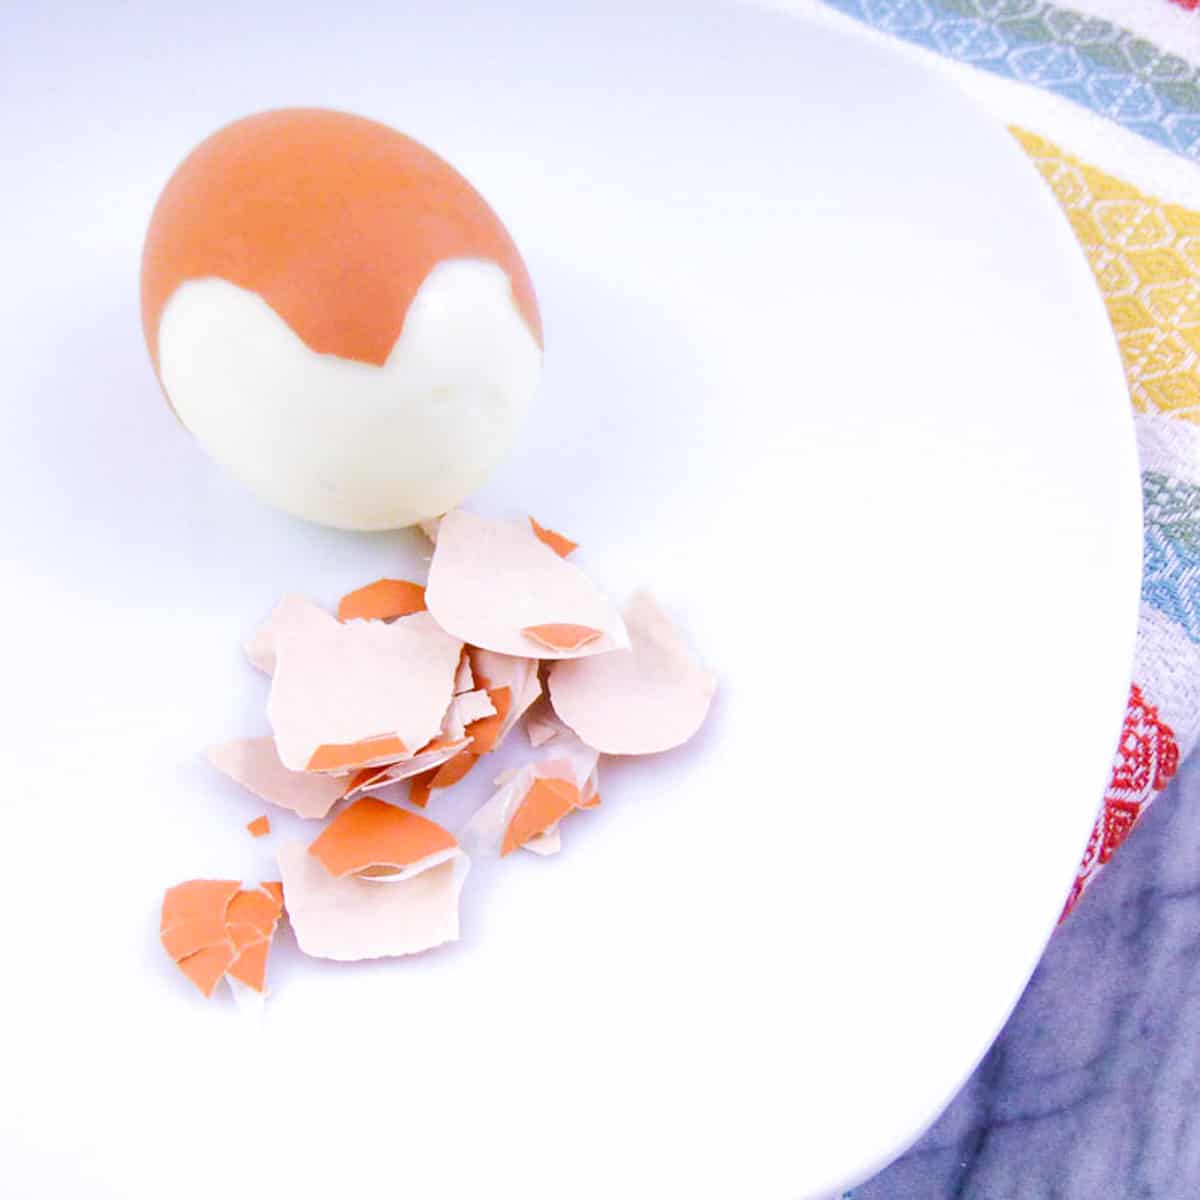 Easy to Peel, partially Peeled Hard Boiled Steamed Fresh Egg